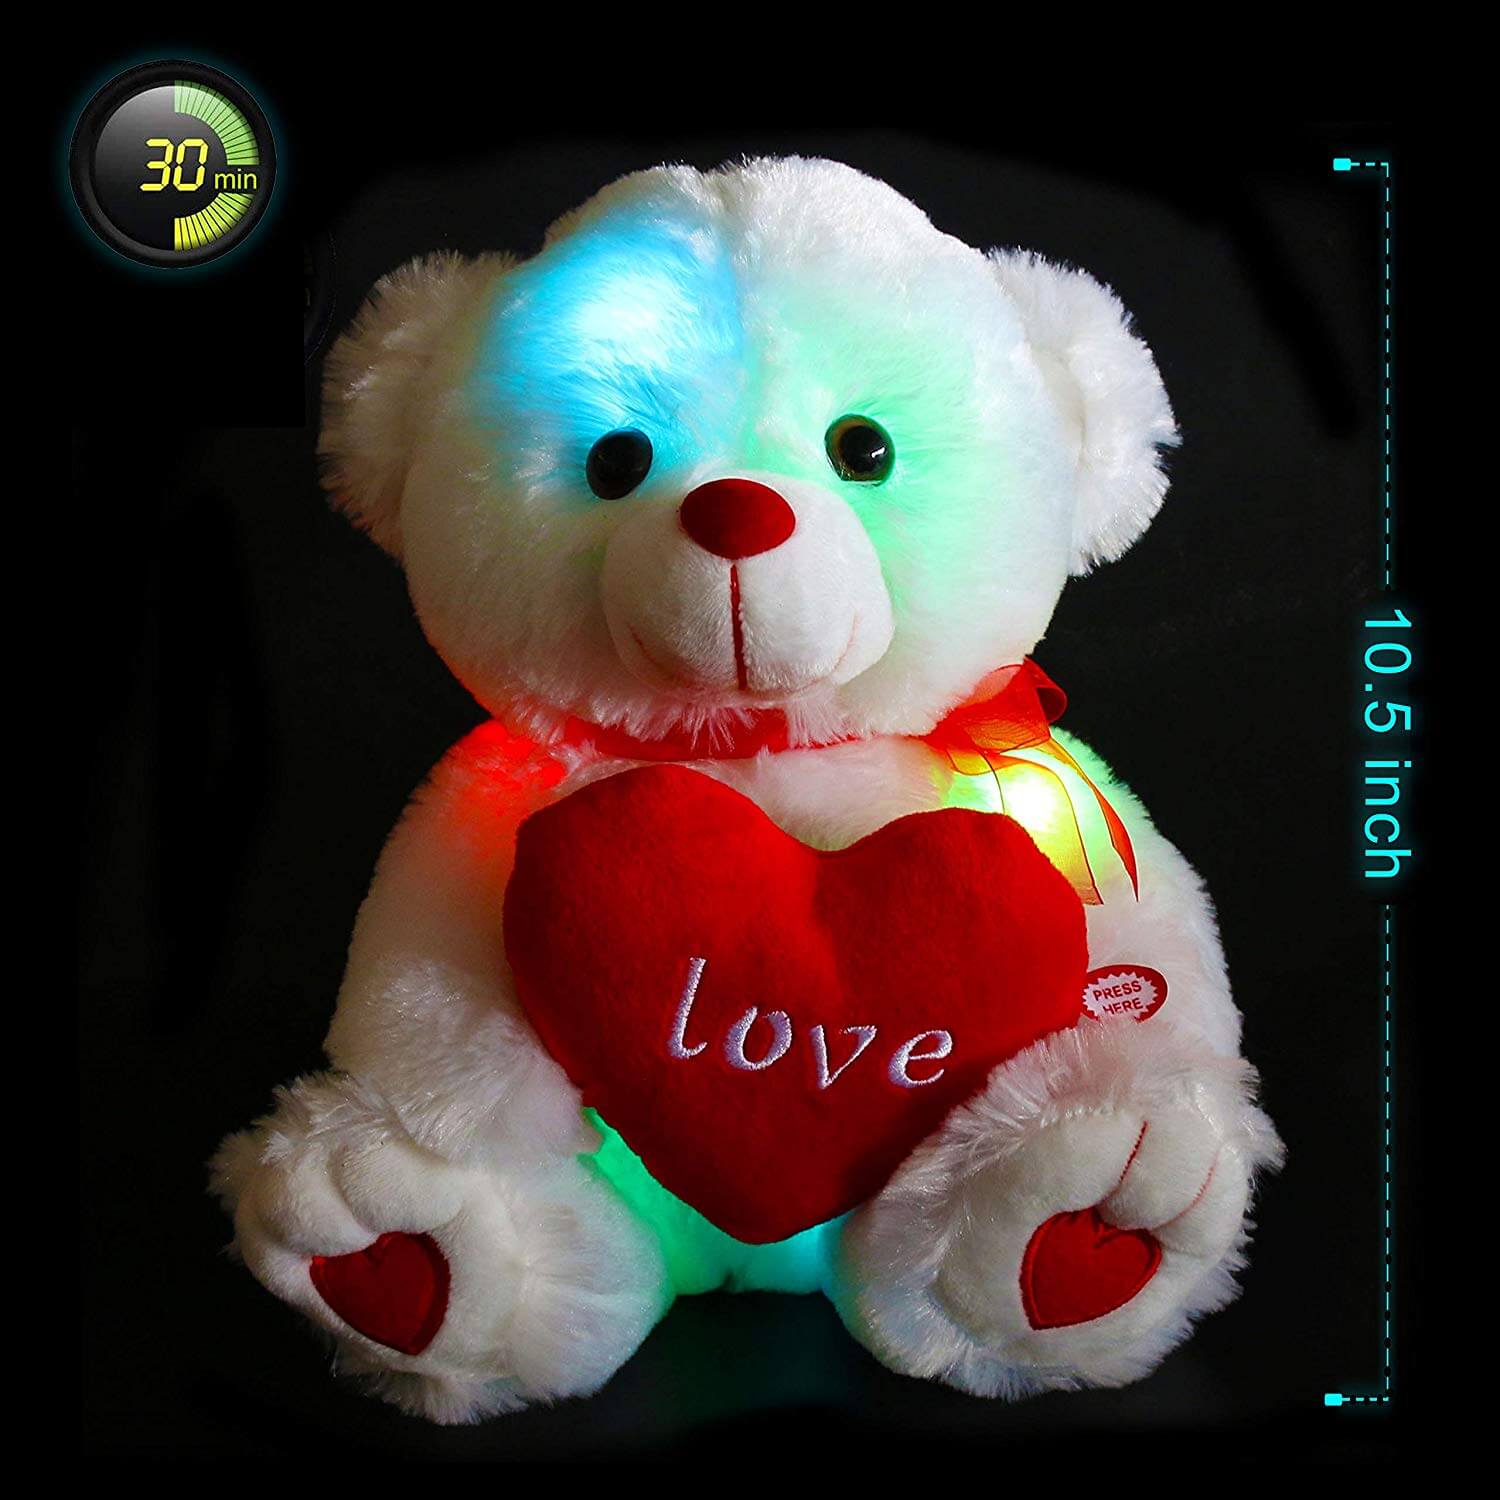 light up teddy bear love gift, 10.5-inch | Bstaofy - Glow Guards